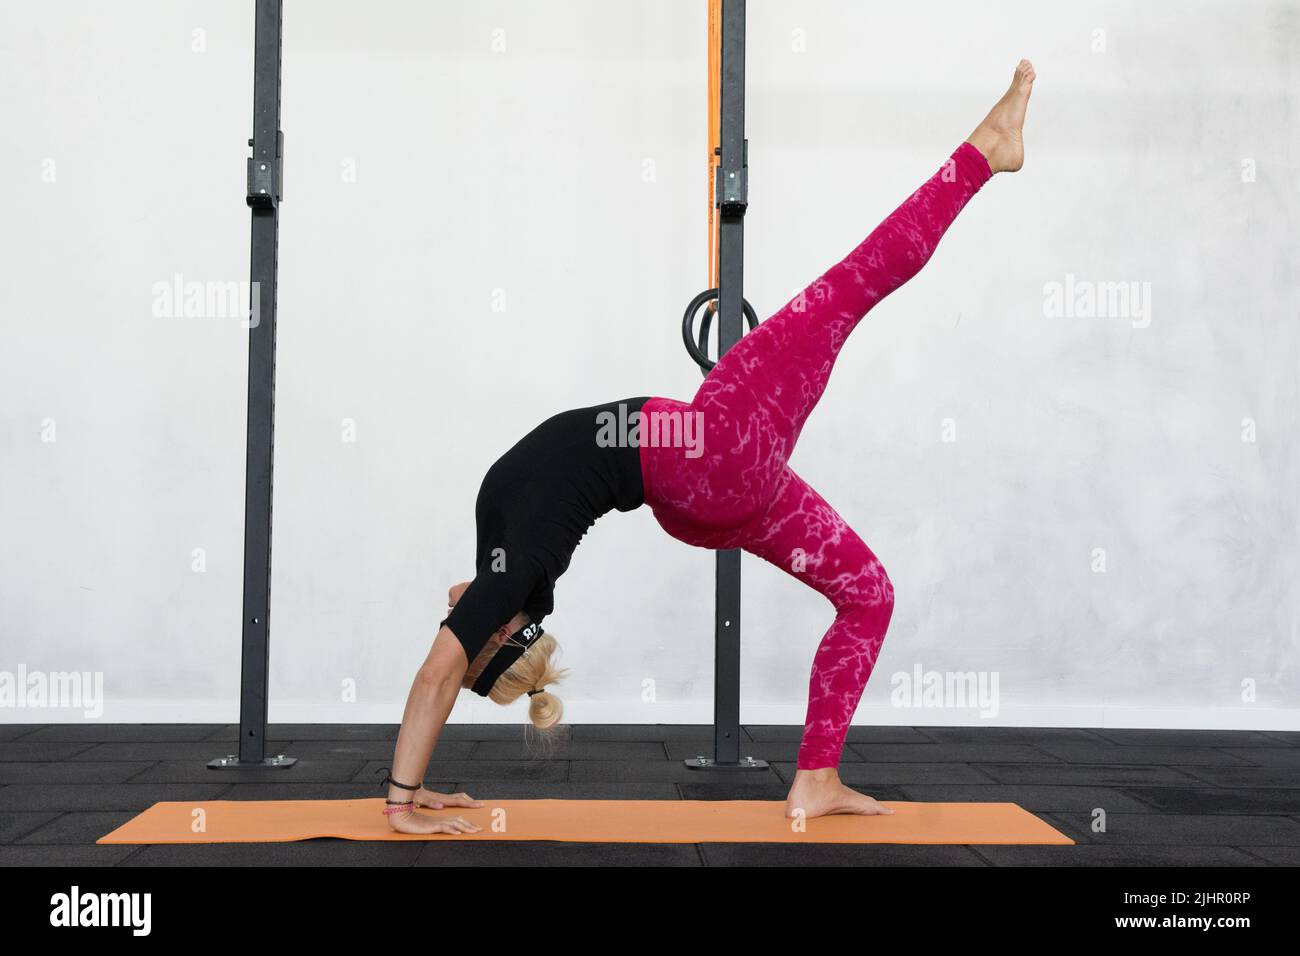 Youth blonde woman performing ekapada chakrasana, advanced back bending with right leg upwards yoga pose wearing colorful pink yoga leggings. Stock Photo